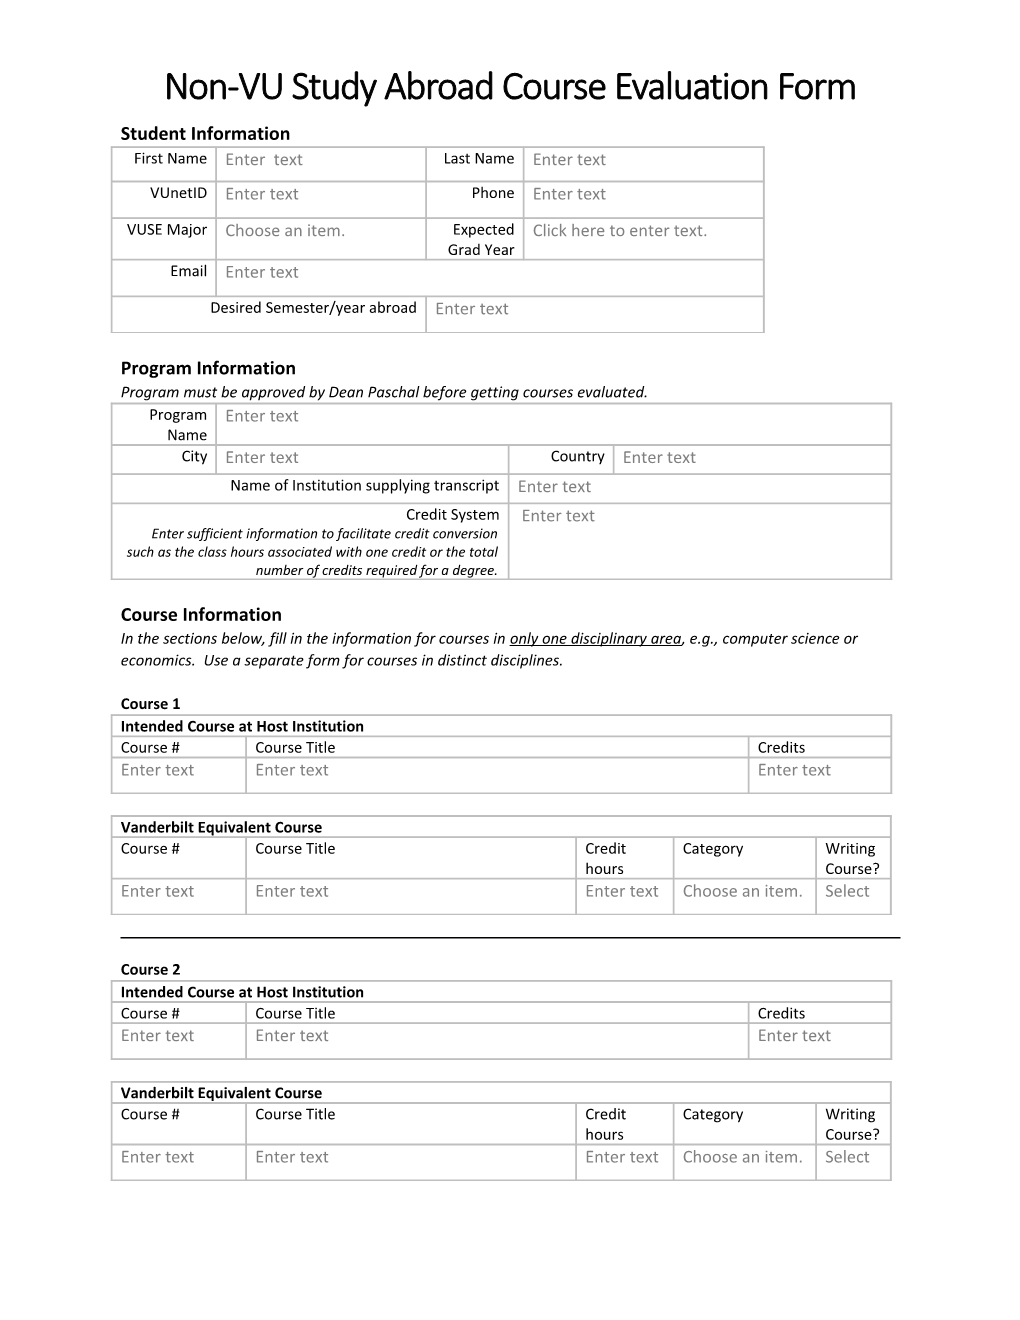 Non-VU Study Abroad Course Evaluation Form